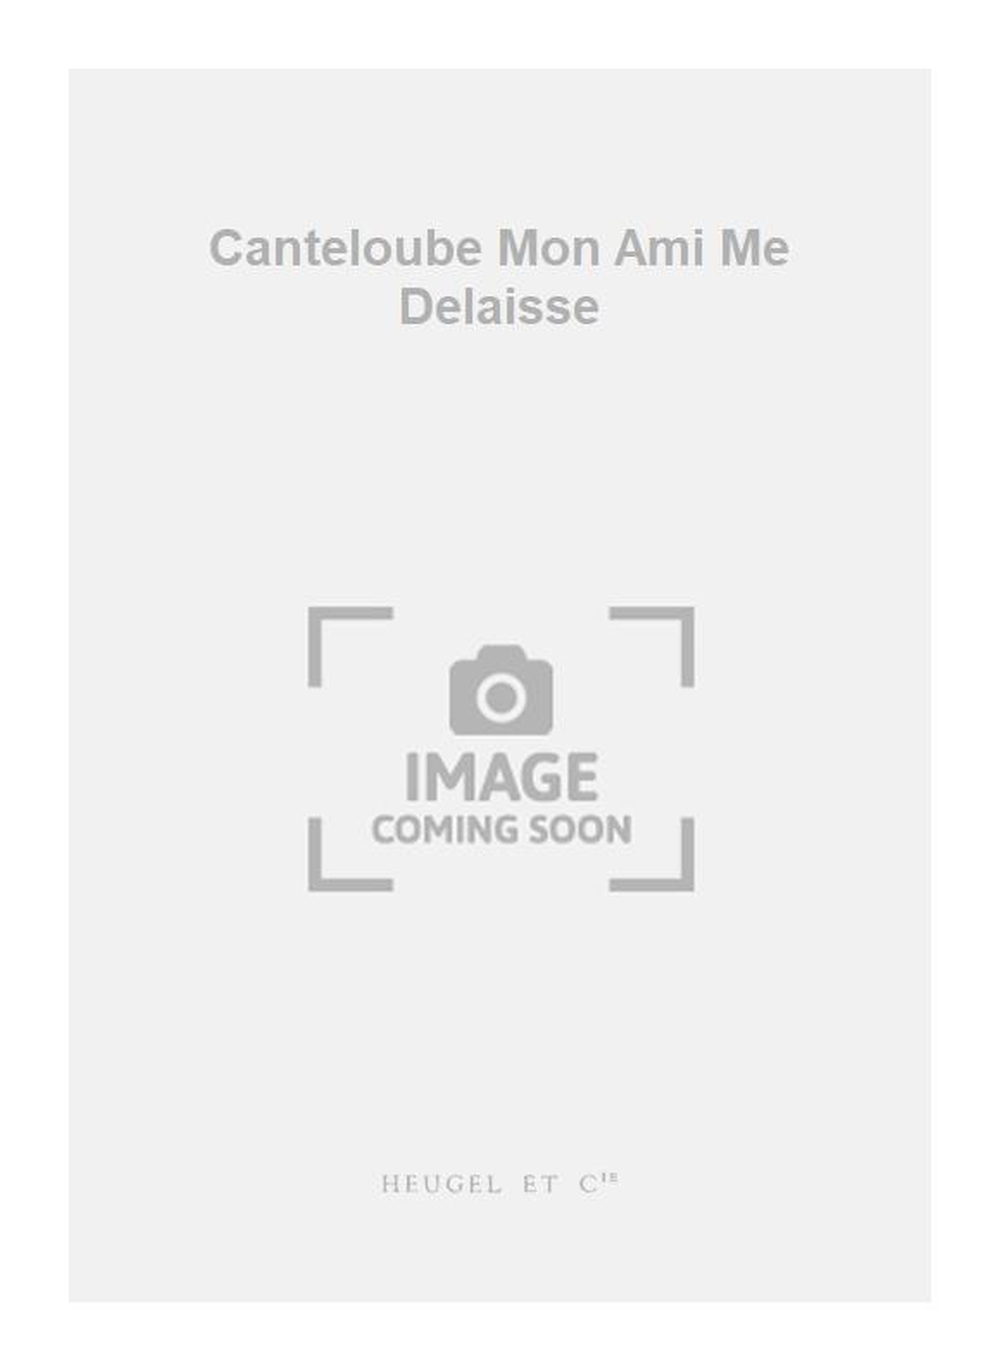 Joseph Canteloube: Canteloube Mon Ami Me Delaisse